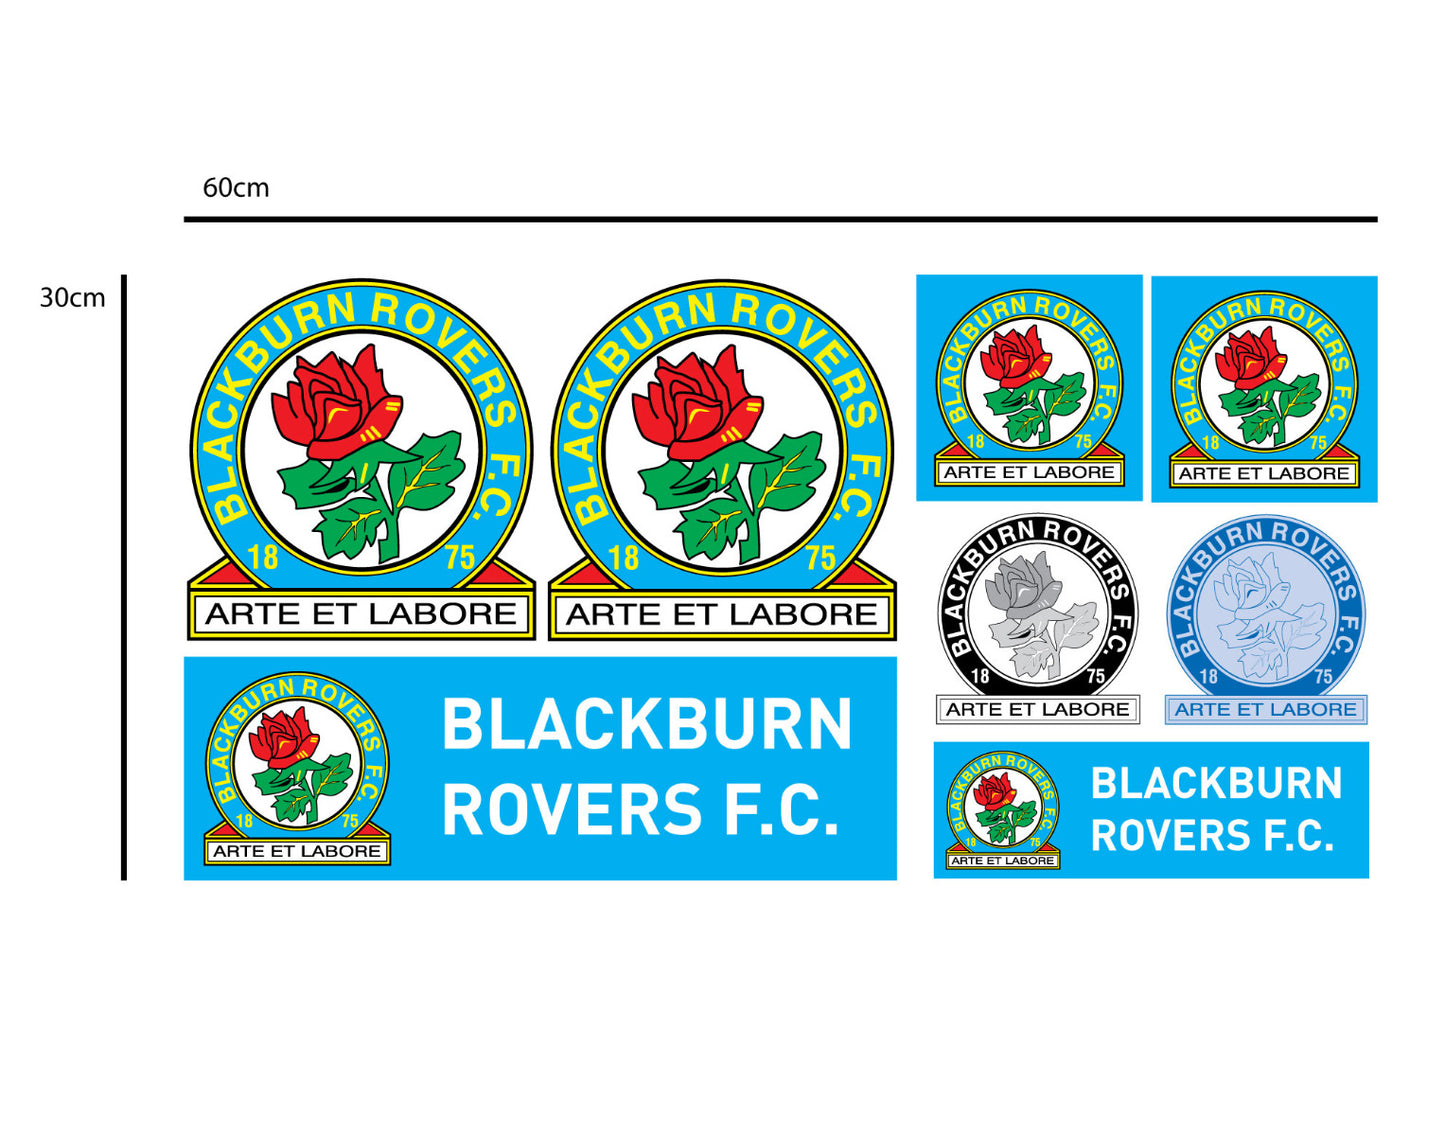 Blackburn Rovers F.C. - Ben Brereton Diaz Action Cut Out Wall Sticker + Decal Set